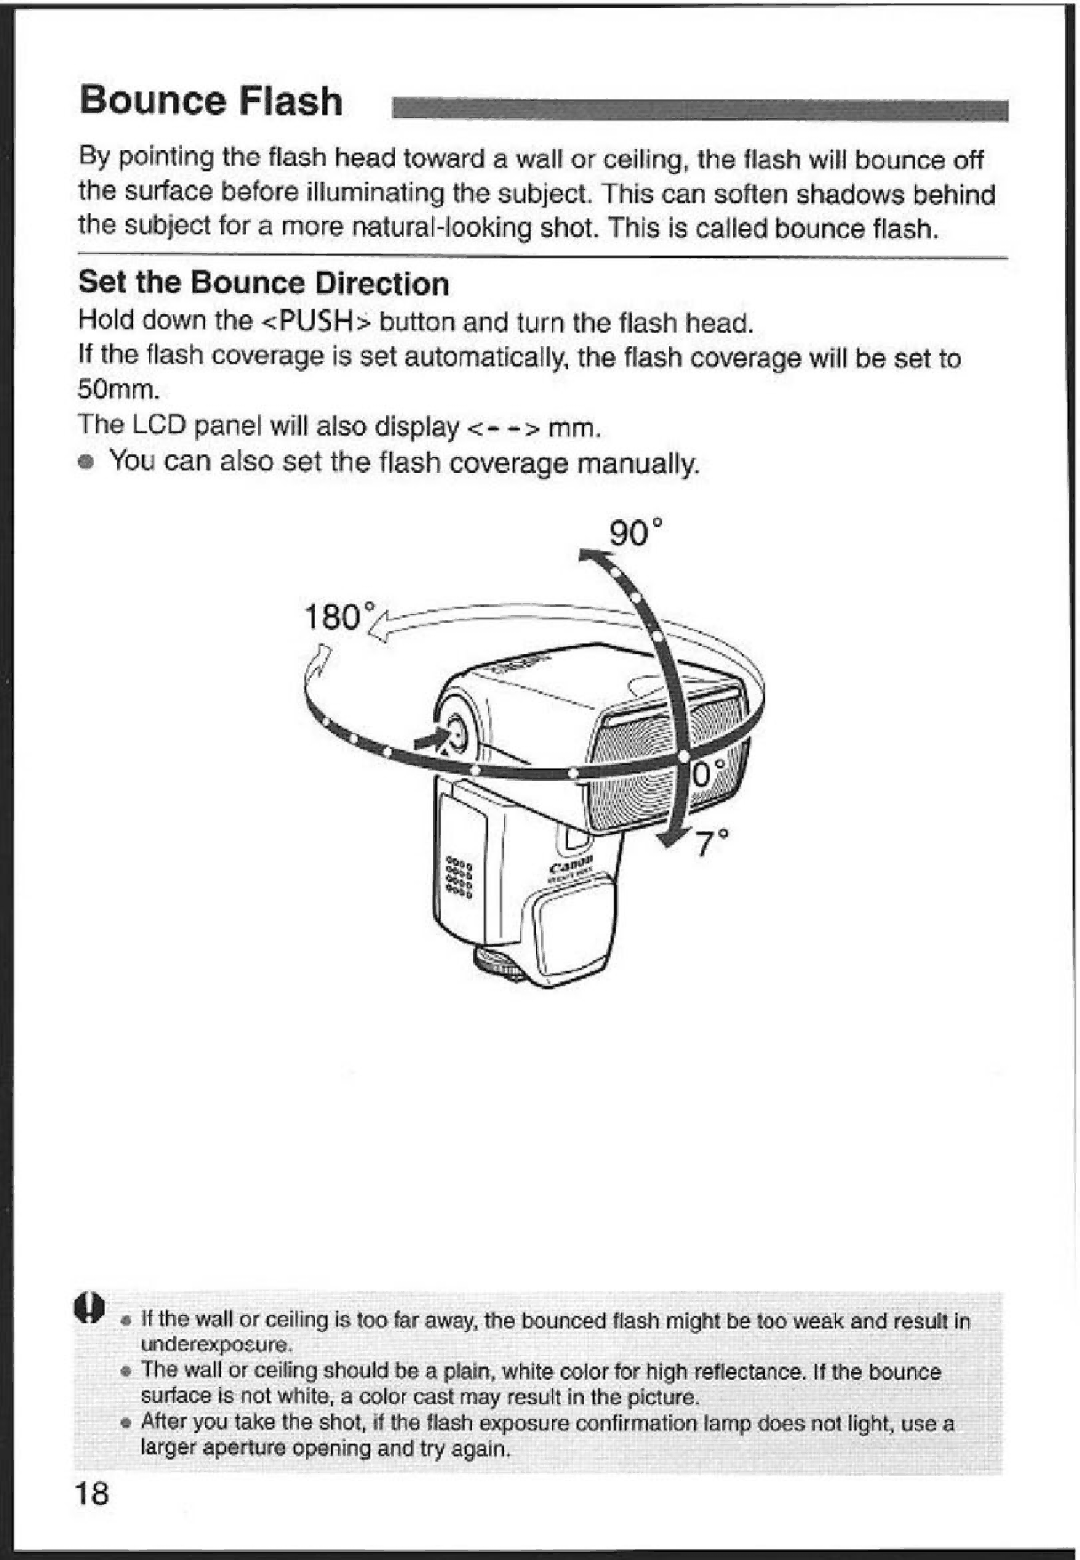 Canon 580EX instruction manual Bounce Flash, Set the Bounce Direction, You can also set the flash coverage manually 